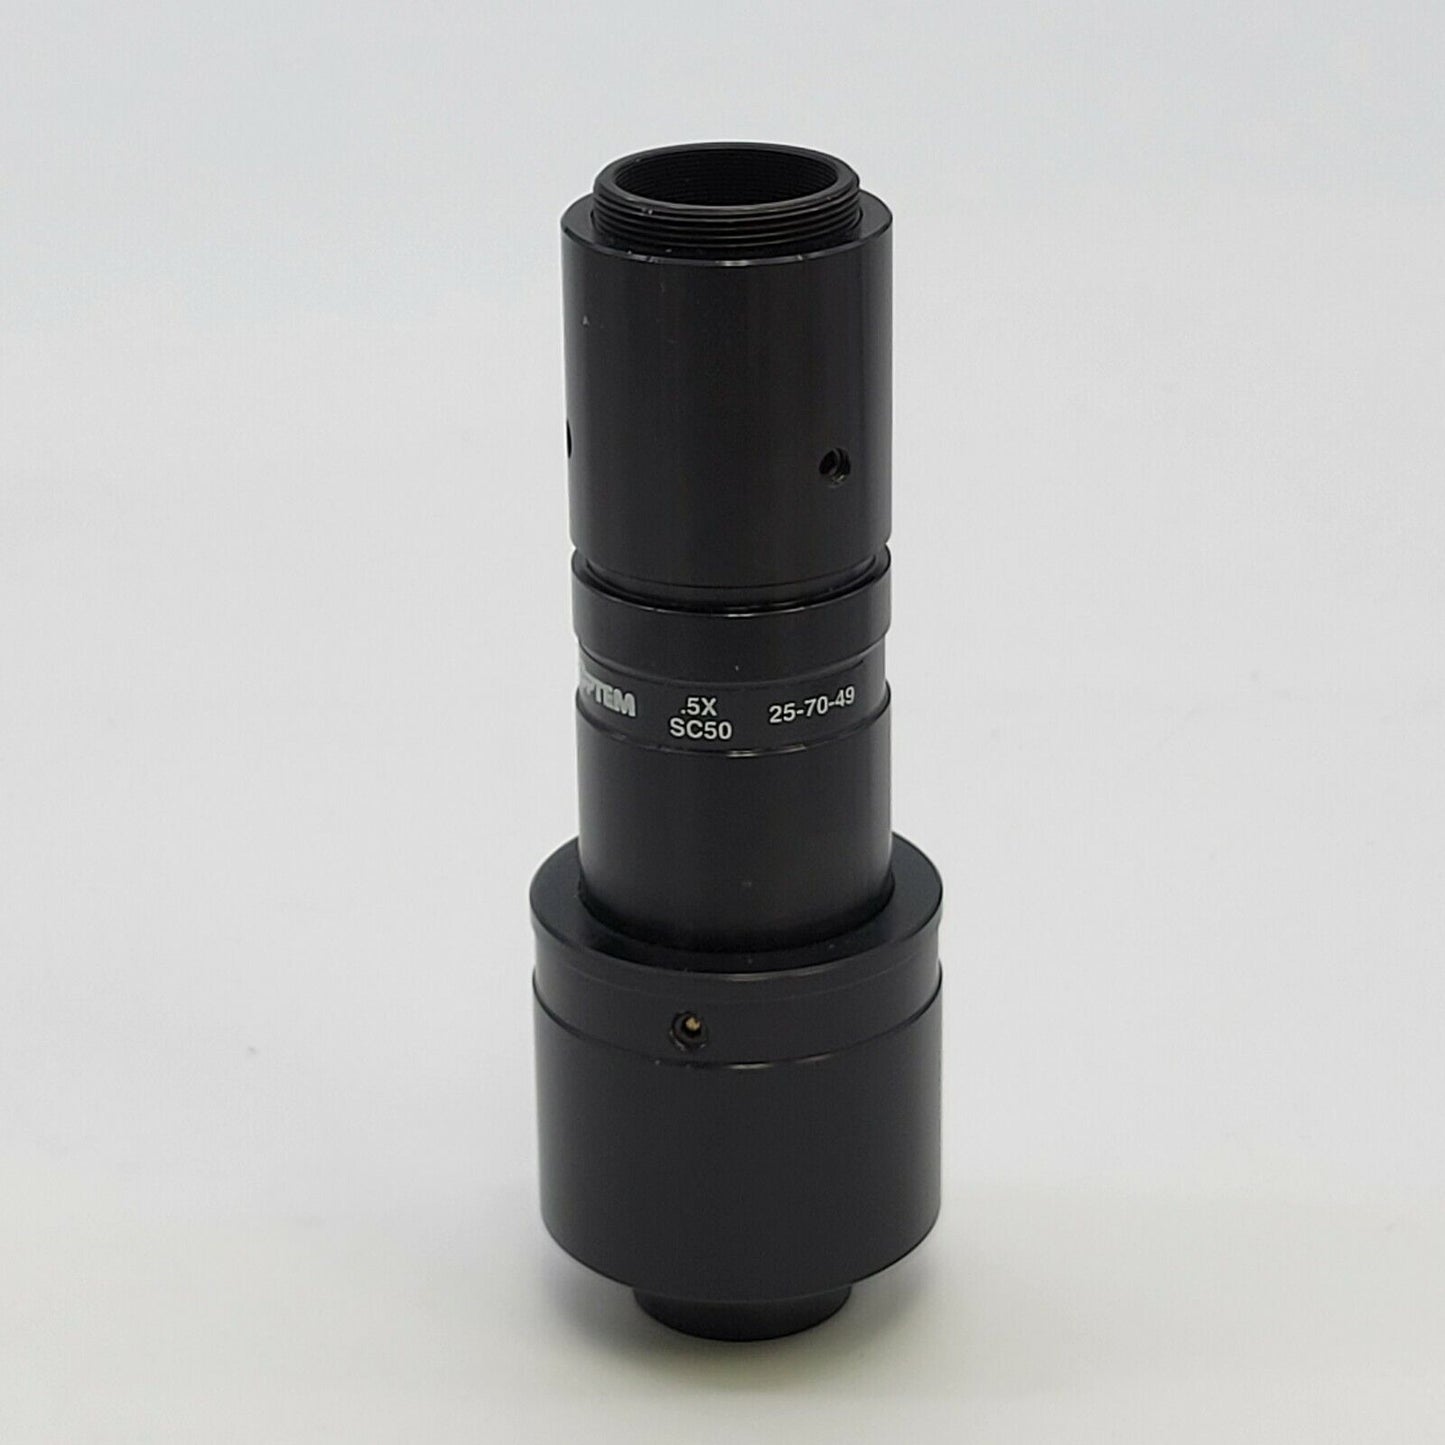 Optem Microscope Camera Adapter Coupler .5x SC50 25-70-49 & F Clamp 25-70-13 - microscopemarketplace